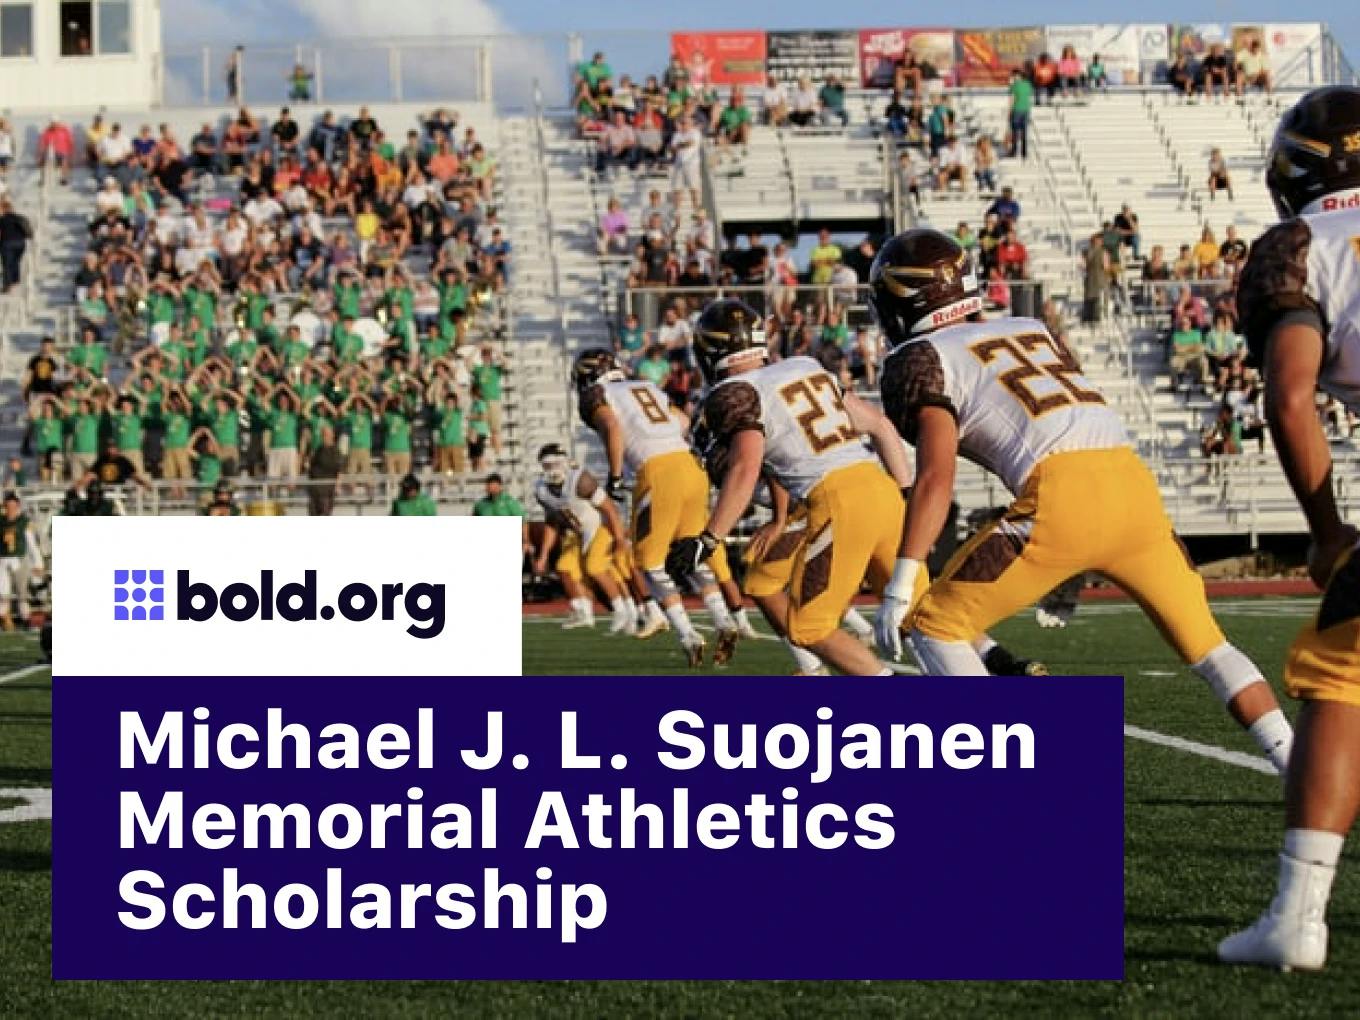 Michael J. L. Suojanen Memorial Athletics Scholarship